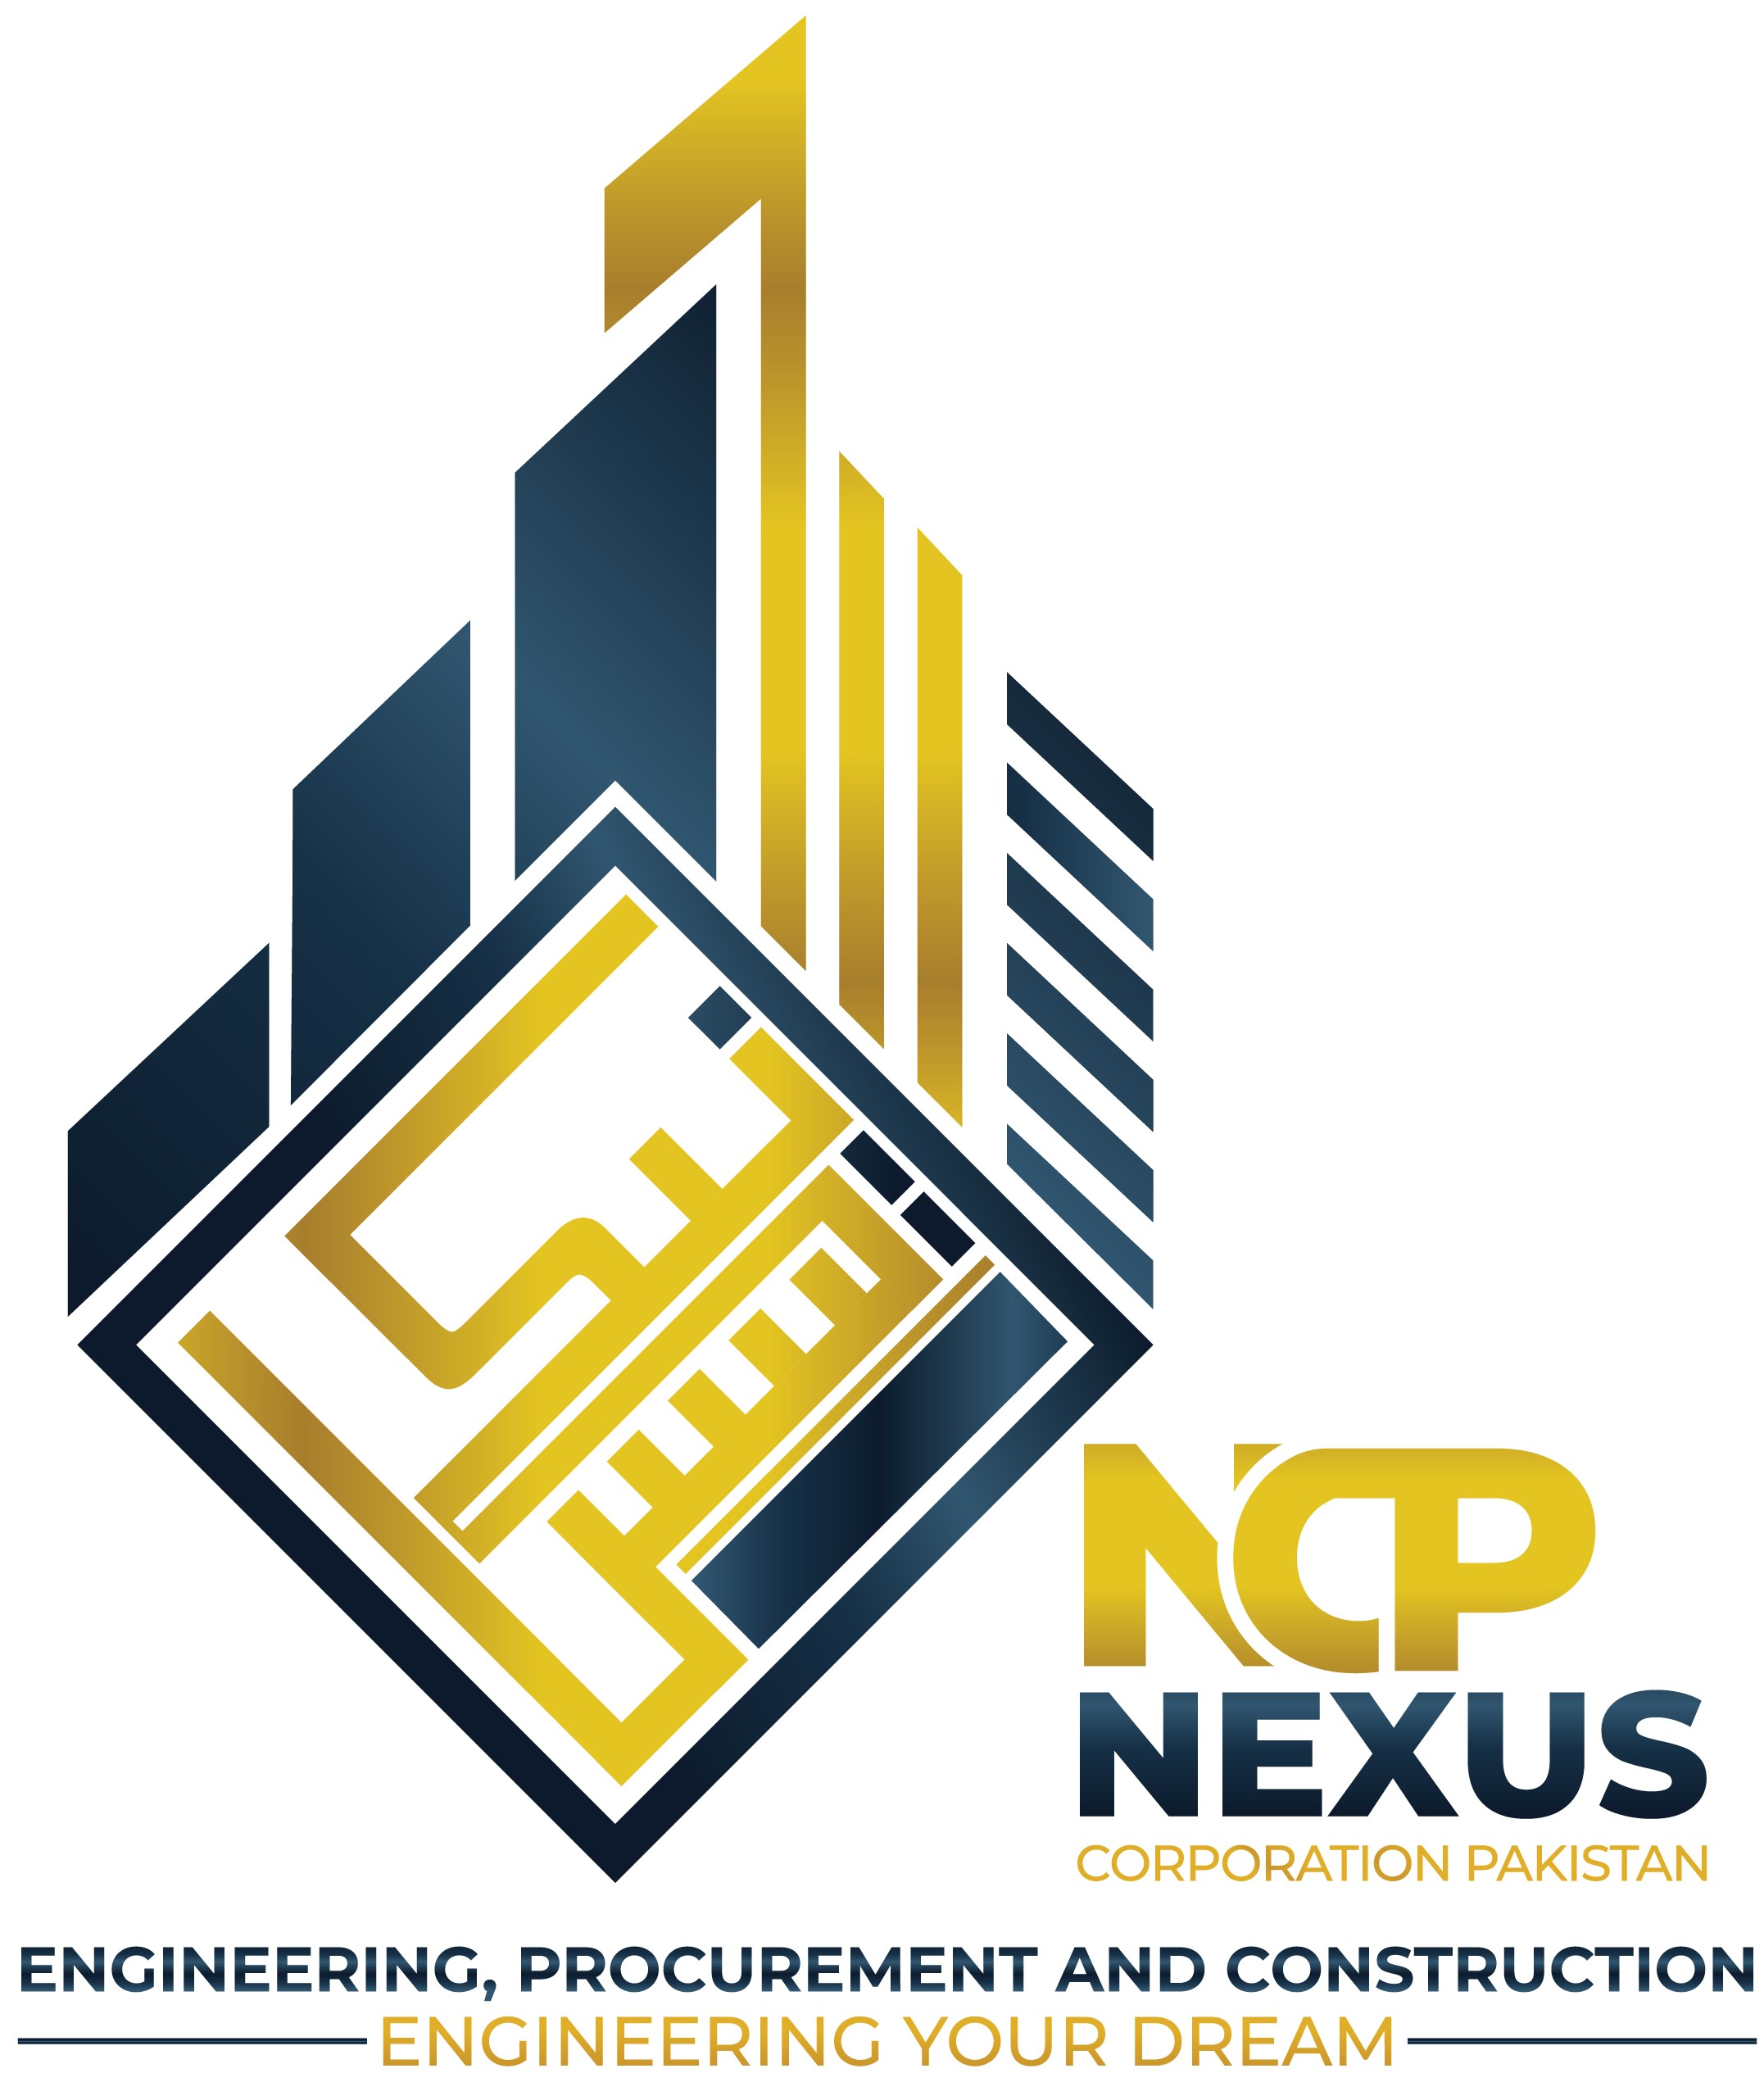 Nexus Corporation Pakistan